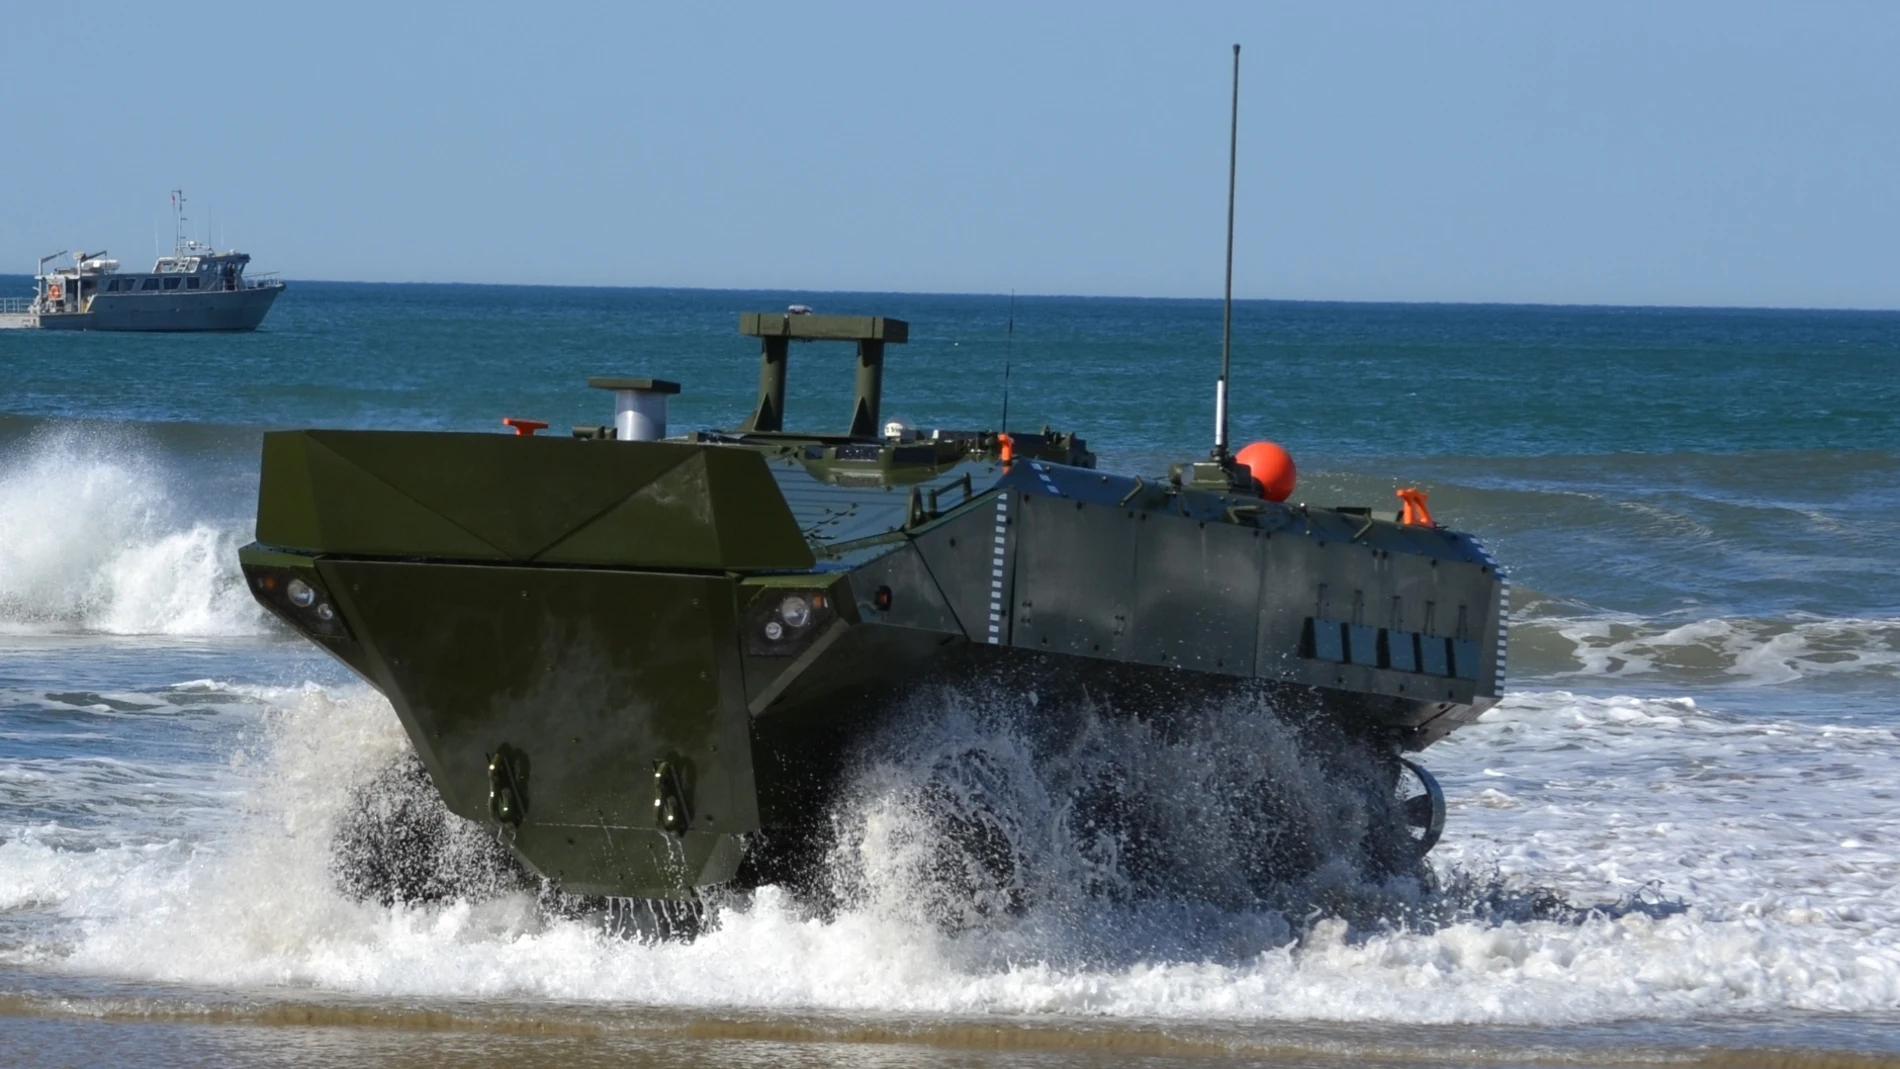 Imagénes del Amphibious Combat Vehicle (ACV) en uso en el Marine Corps Systems Command, por el que ha mostrado interés la Armada española